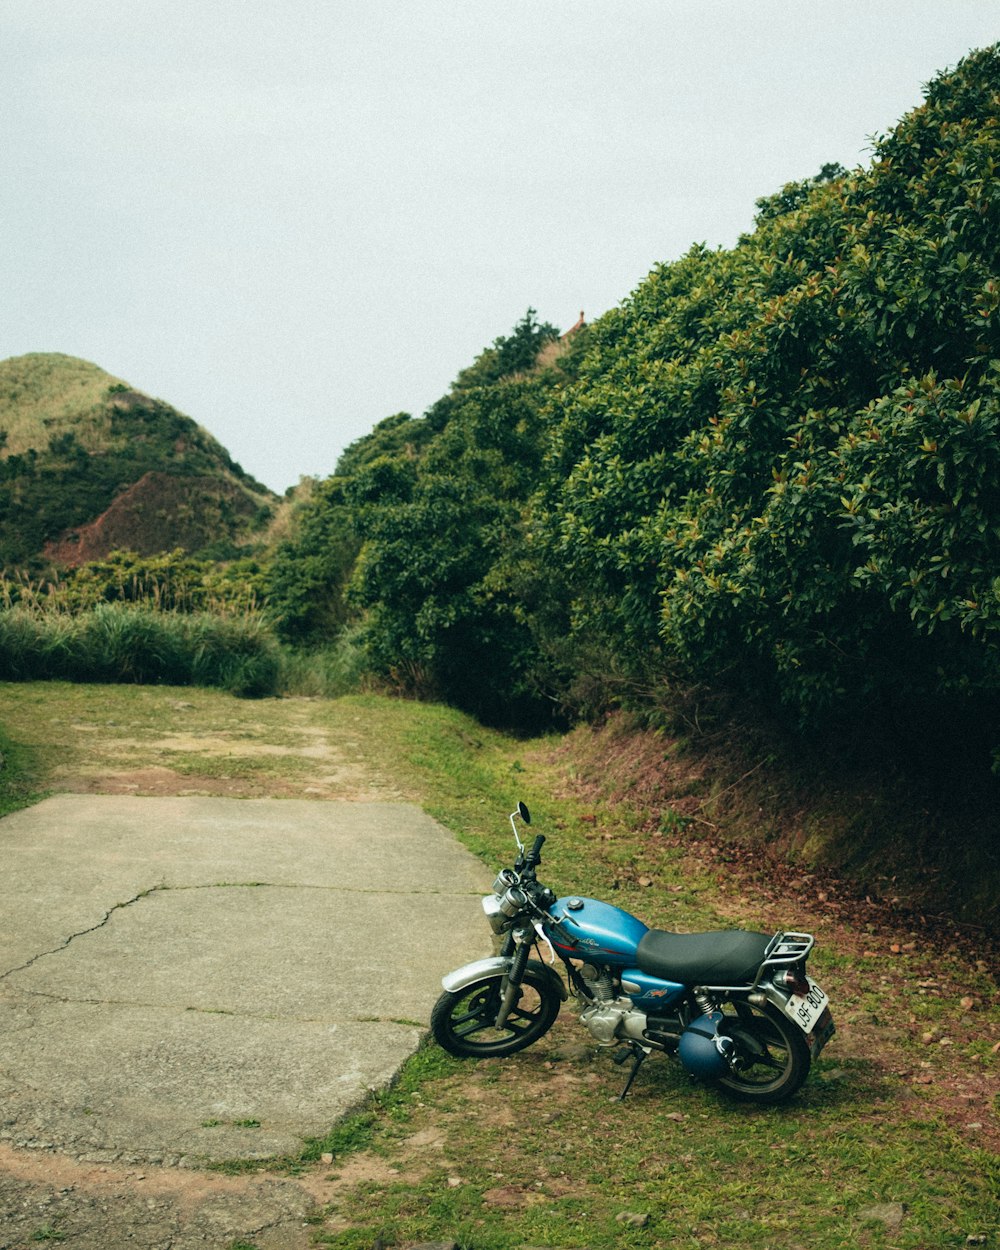 una motocicleta azul estacionada al costado de una carretera